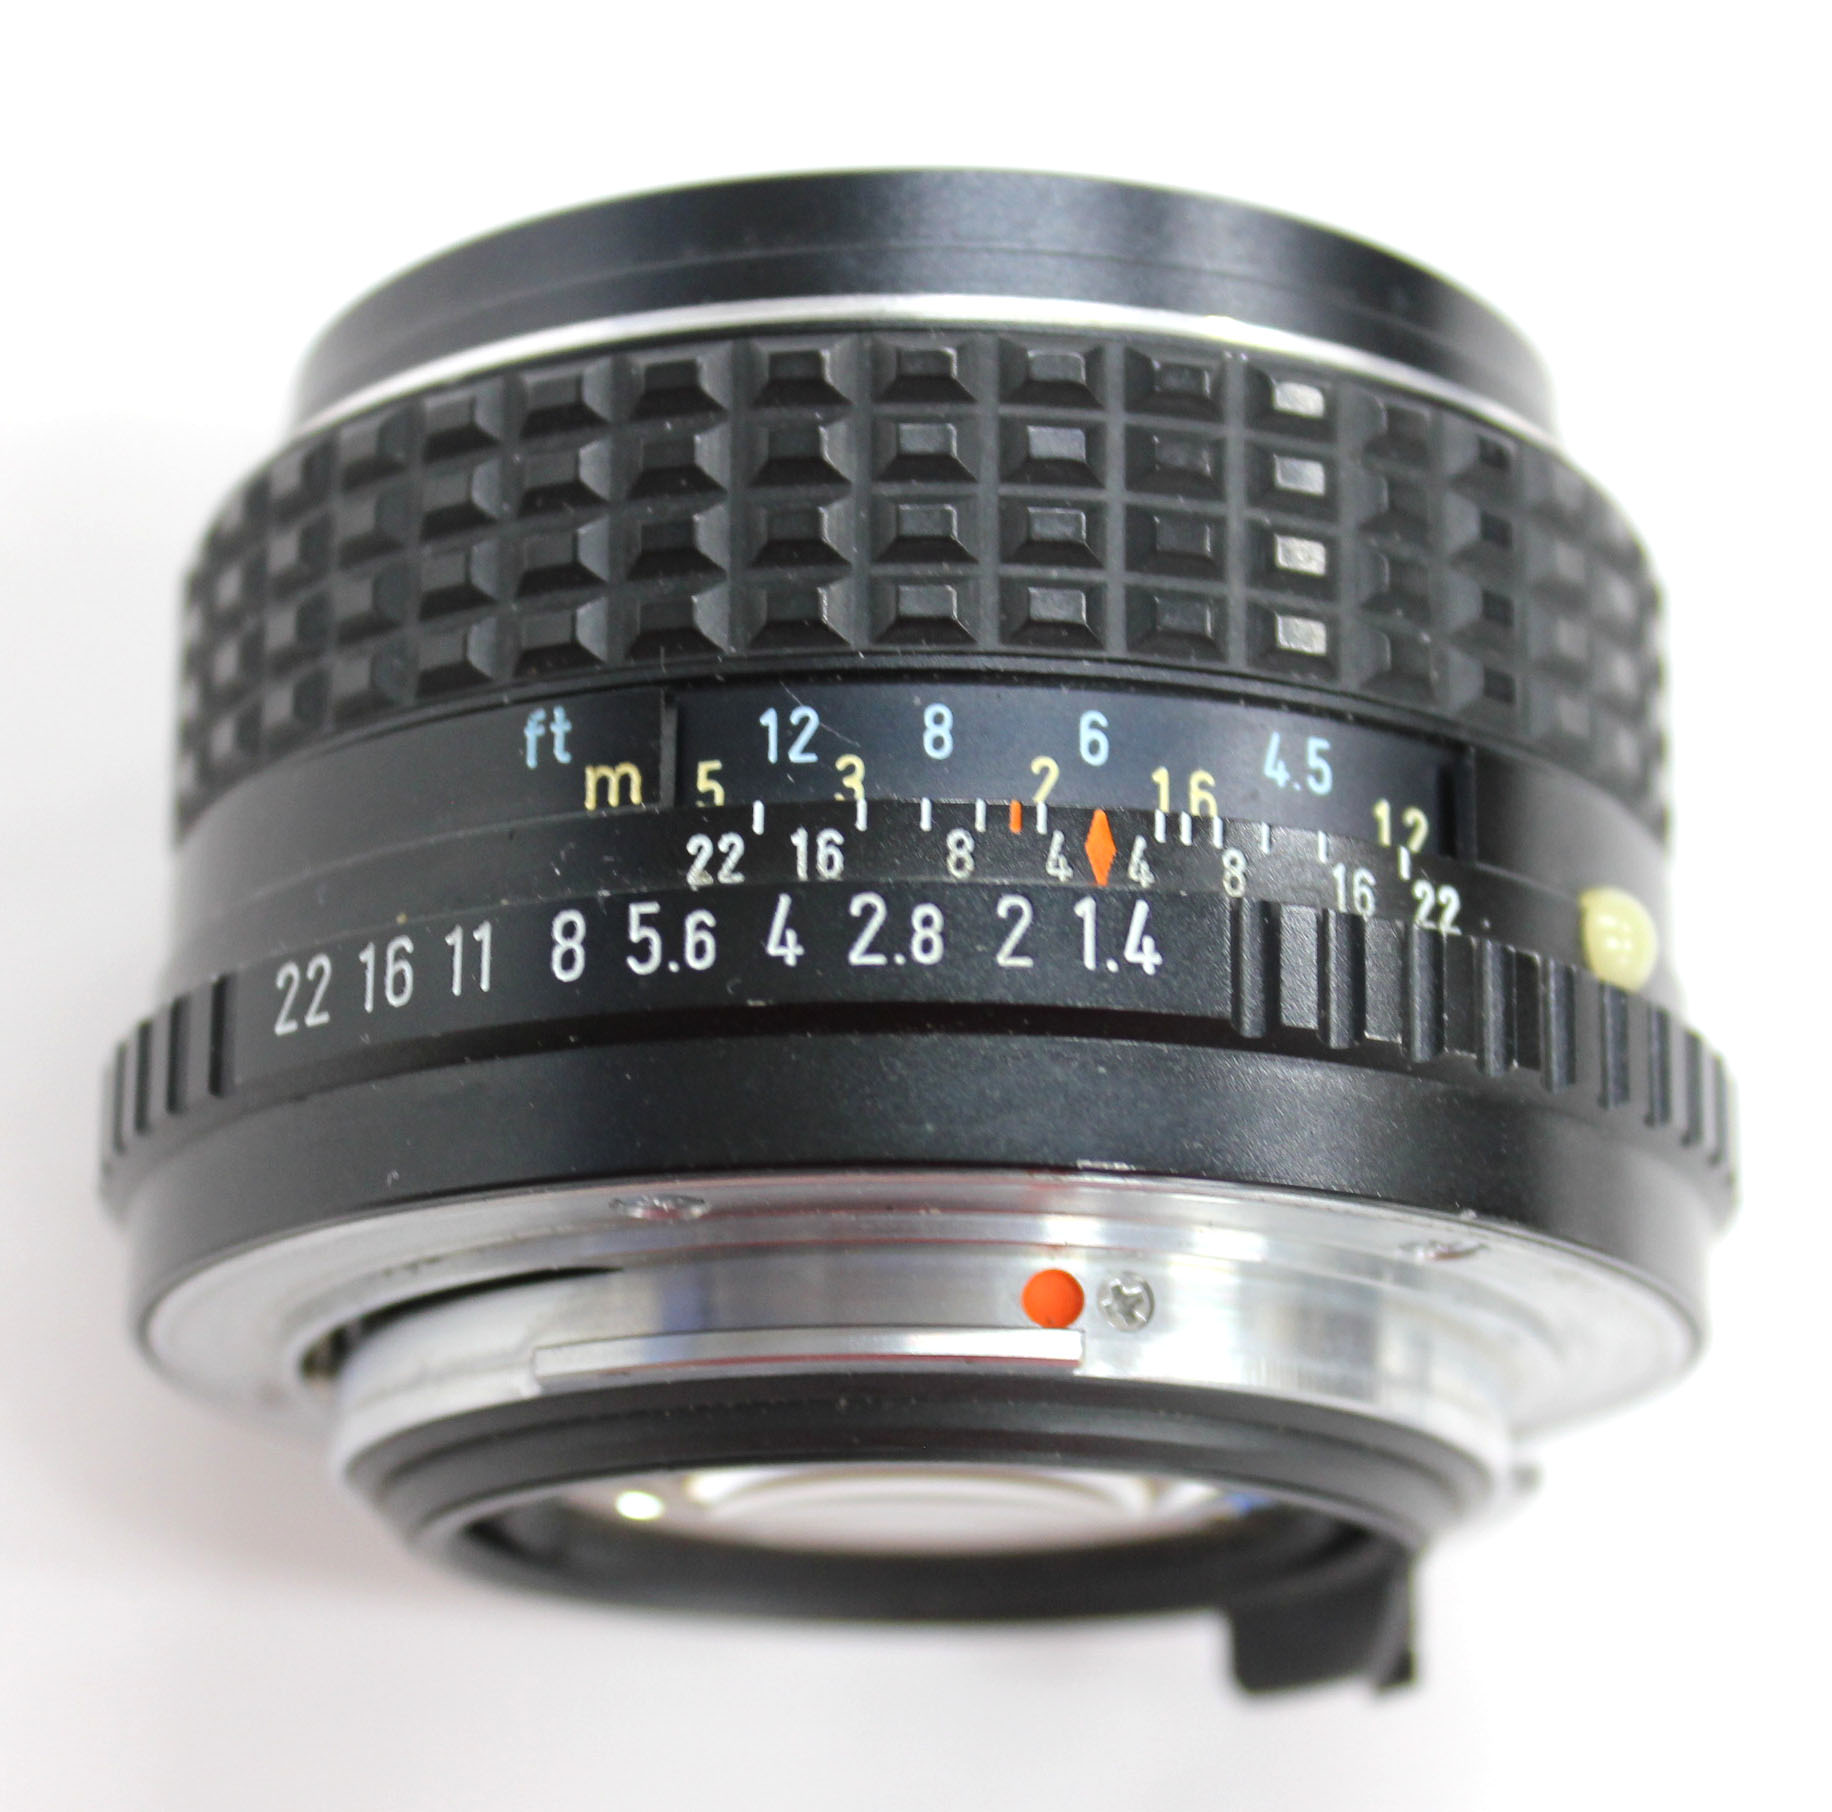 Pentax MX SLR 35mm Film Camera with SMC Pentax-M 50mm F/1.4 Lens